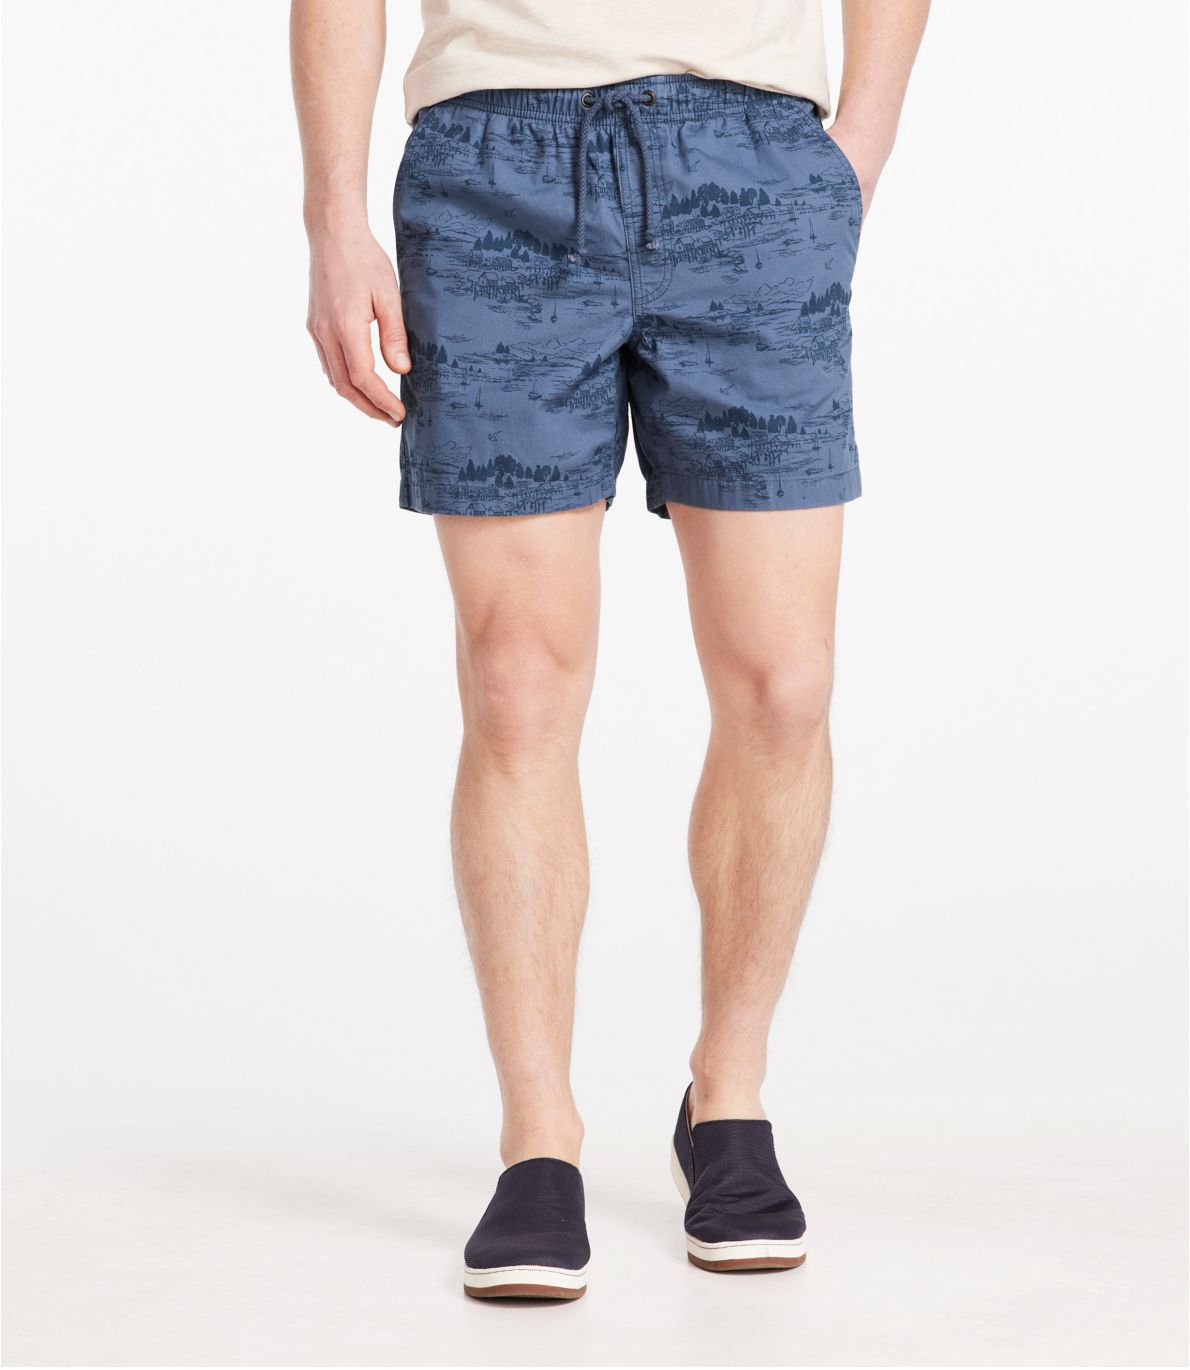 Men's Dock Shorts, 6", Print